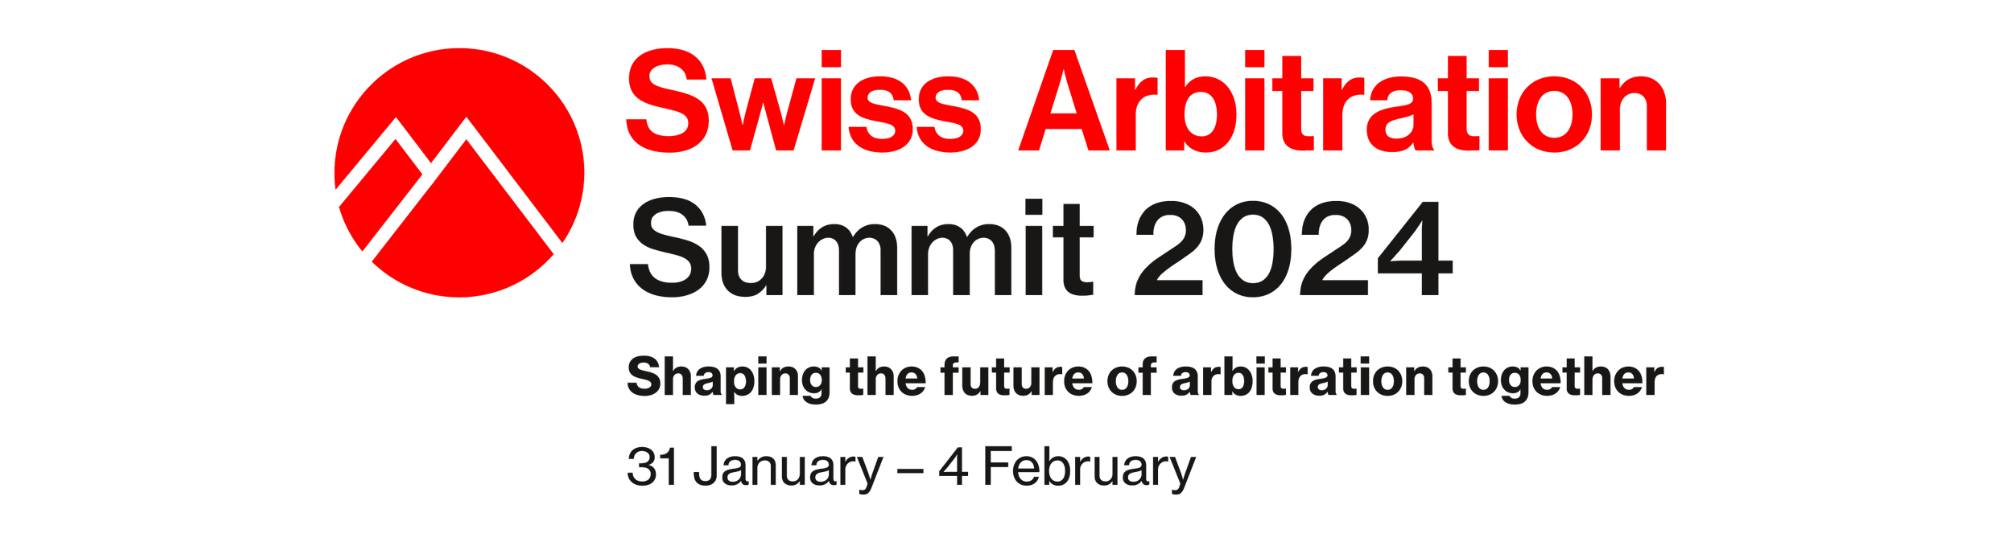 Swiss Arbitration Summit Swiss SkiWeekend 2024